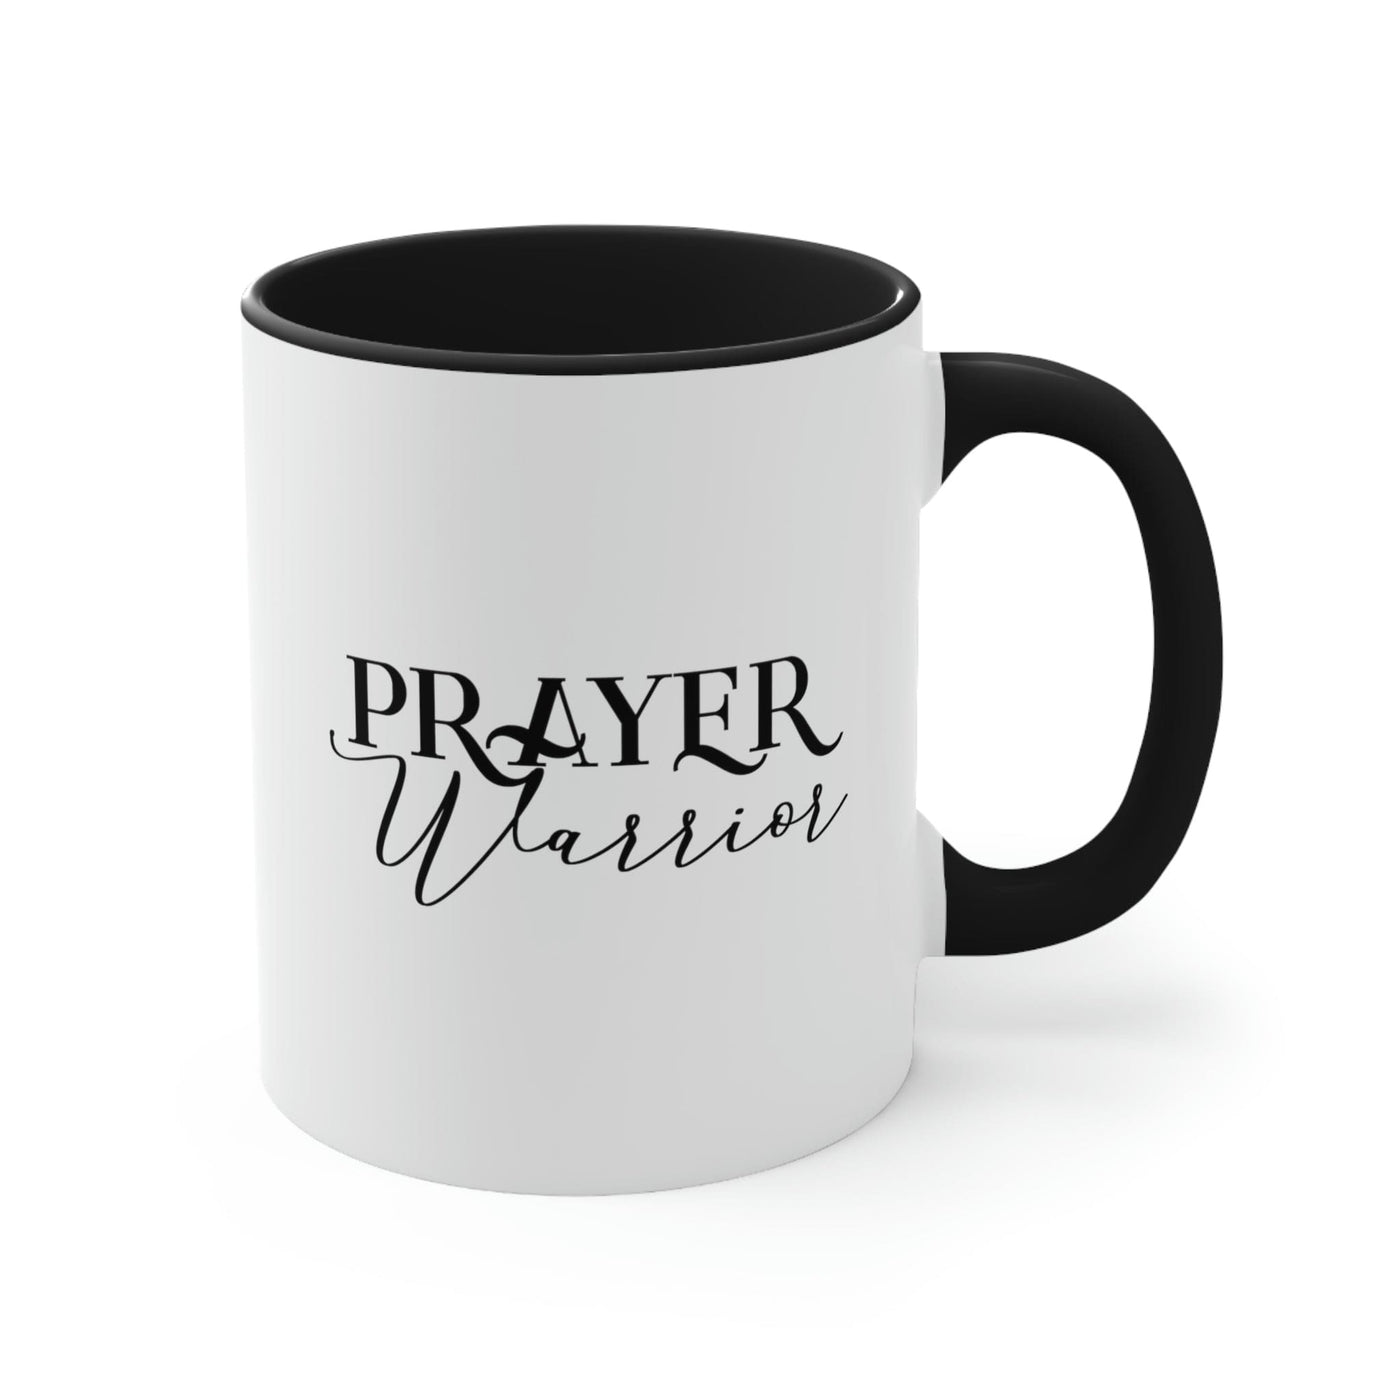 Two-tone Accent Ceramic Mug 11oz Prayer Warrior Illustration - Decorative